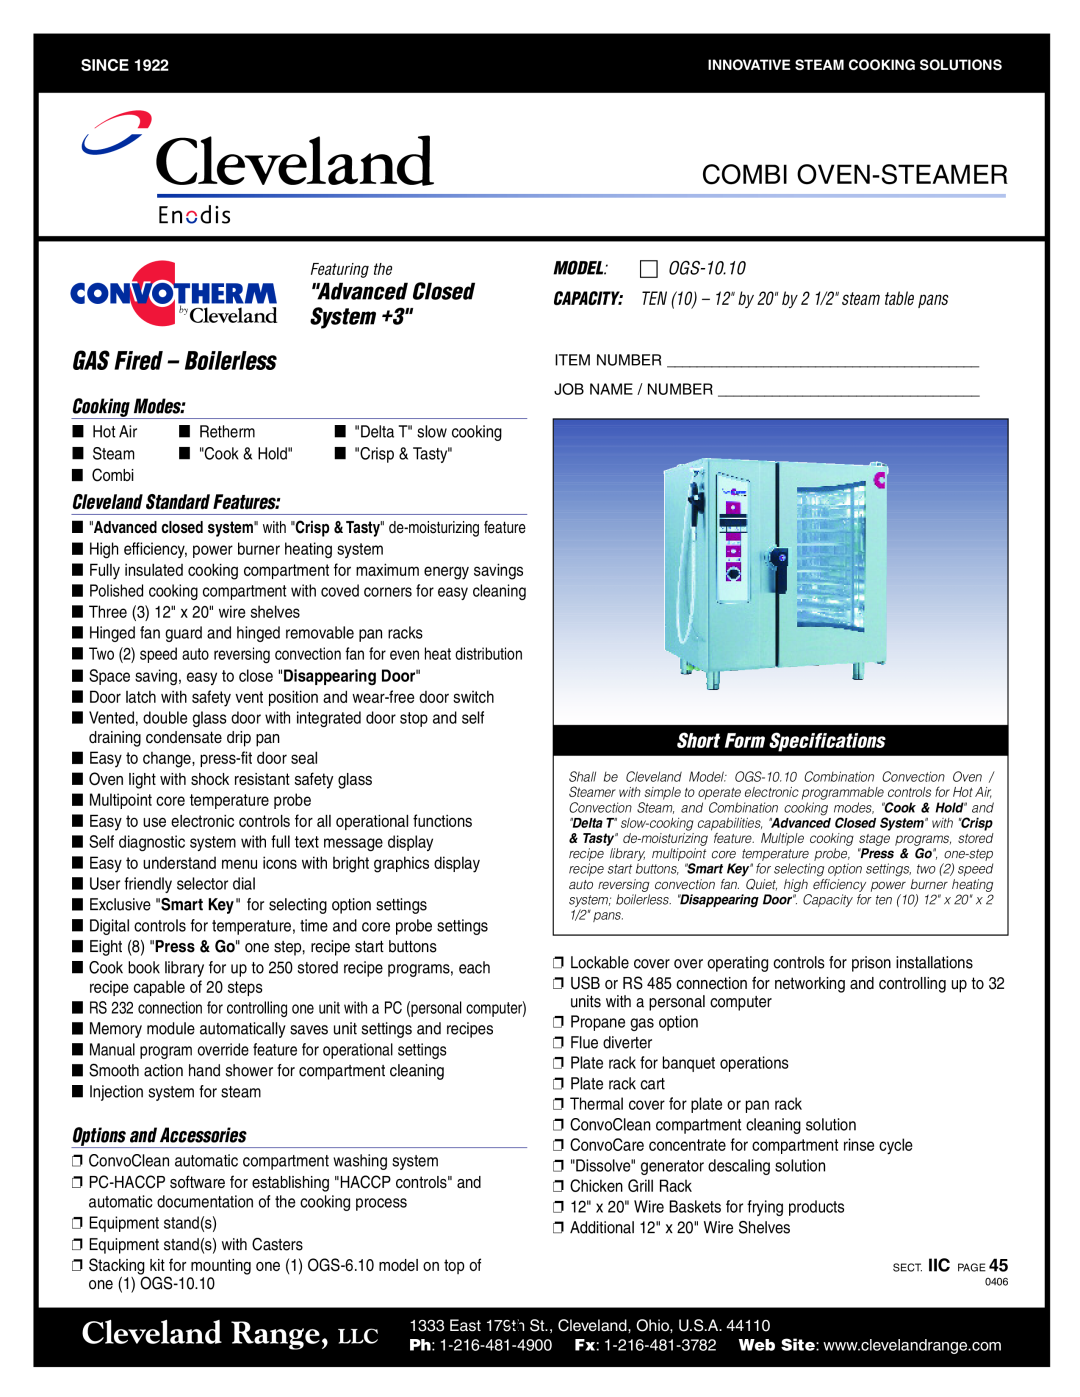 Cleveland Range OGB-6.20 GAS Fired - Boilerless, Cleveland Range, LLC, Combi Oven-Steamer, Advanced Closed, System +3 